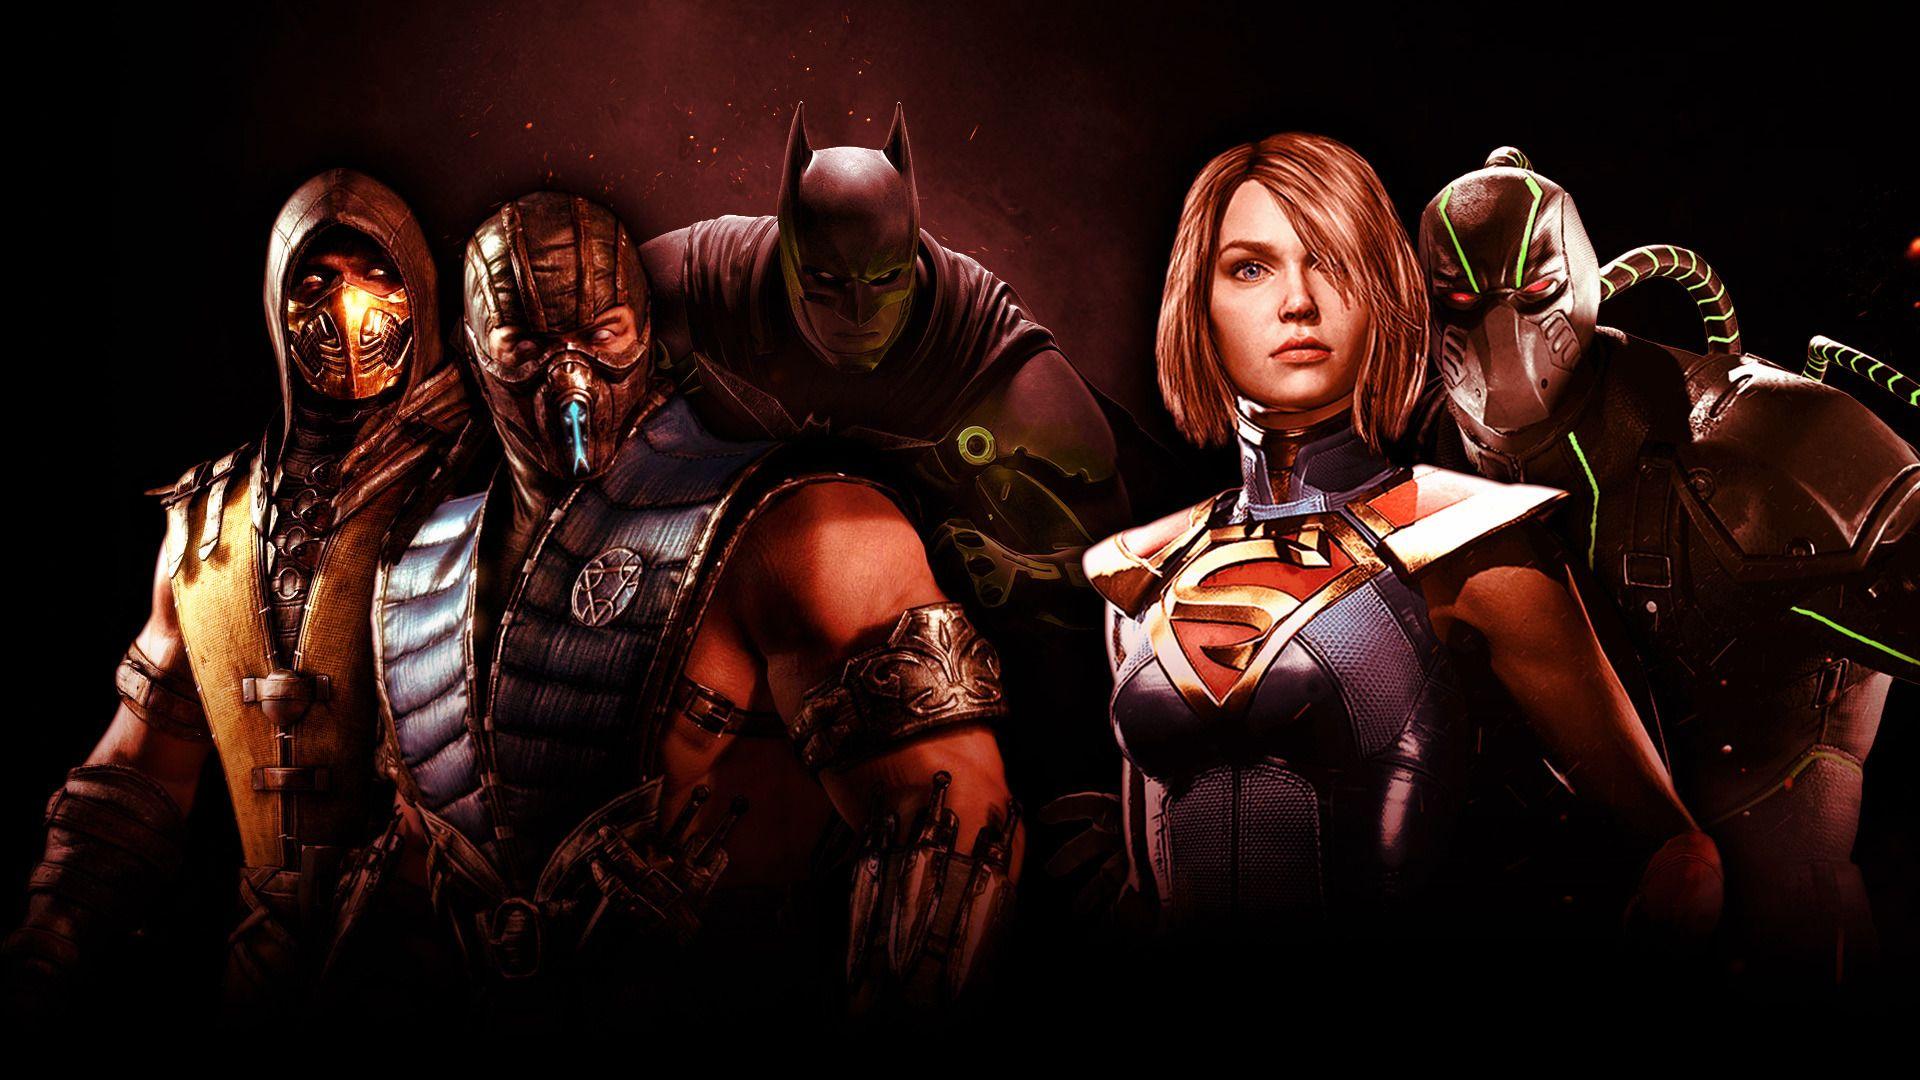 GameSpot Old Logo - Mortal Kombat Vs. Injustice: Series Creator Ed Boon Talks Design ...